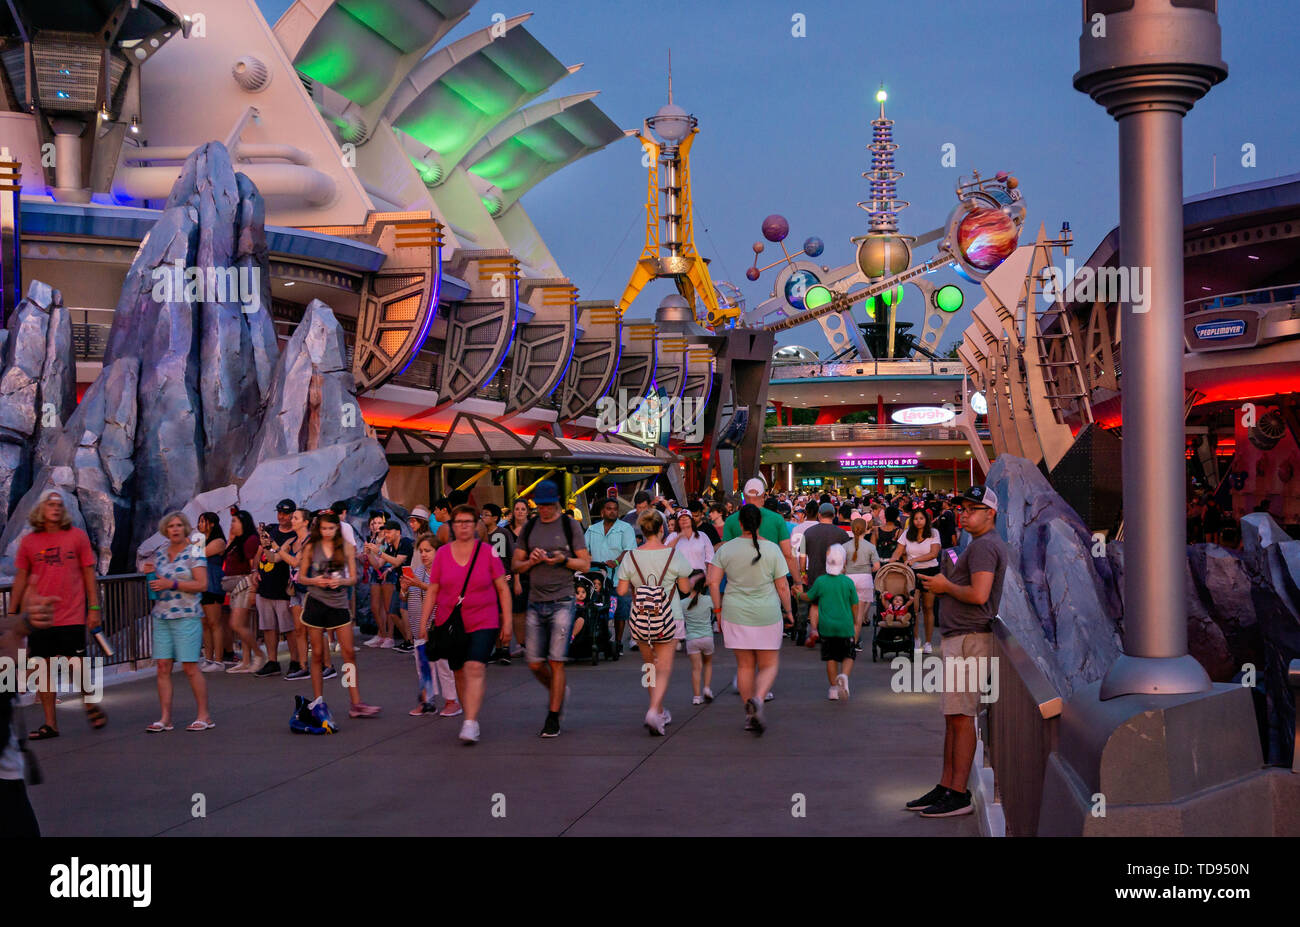 Eingang zum tomorrowland in Disney's Magic Kingdom in Orlando, florids, USA am 29. Mai 2019 Stockfoto